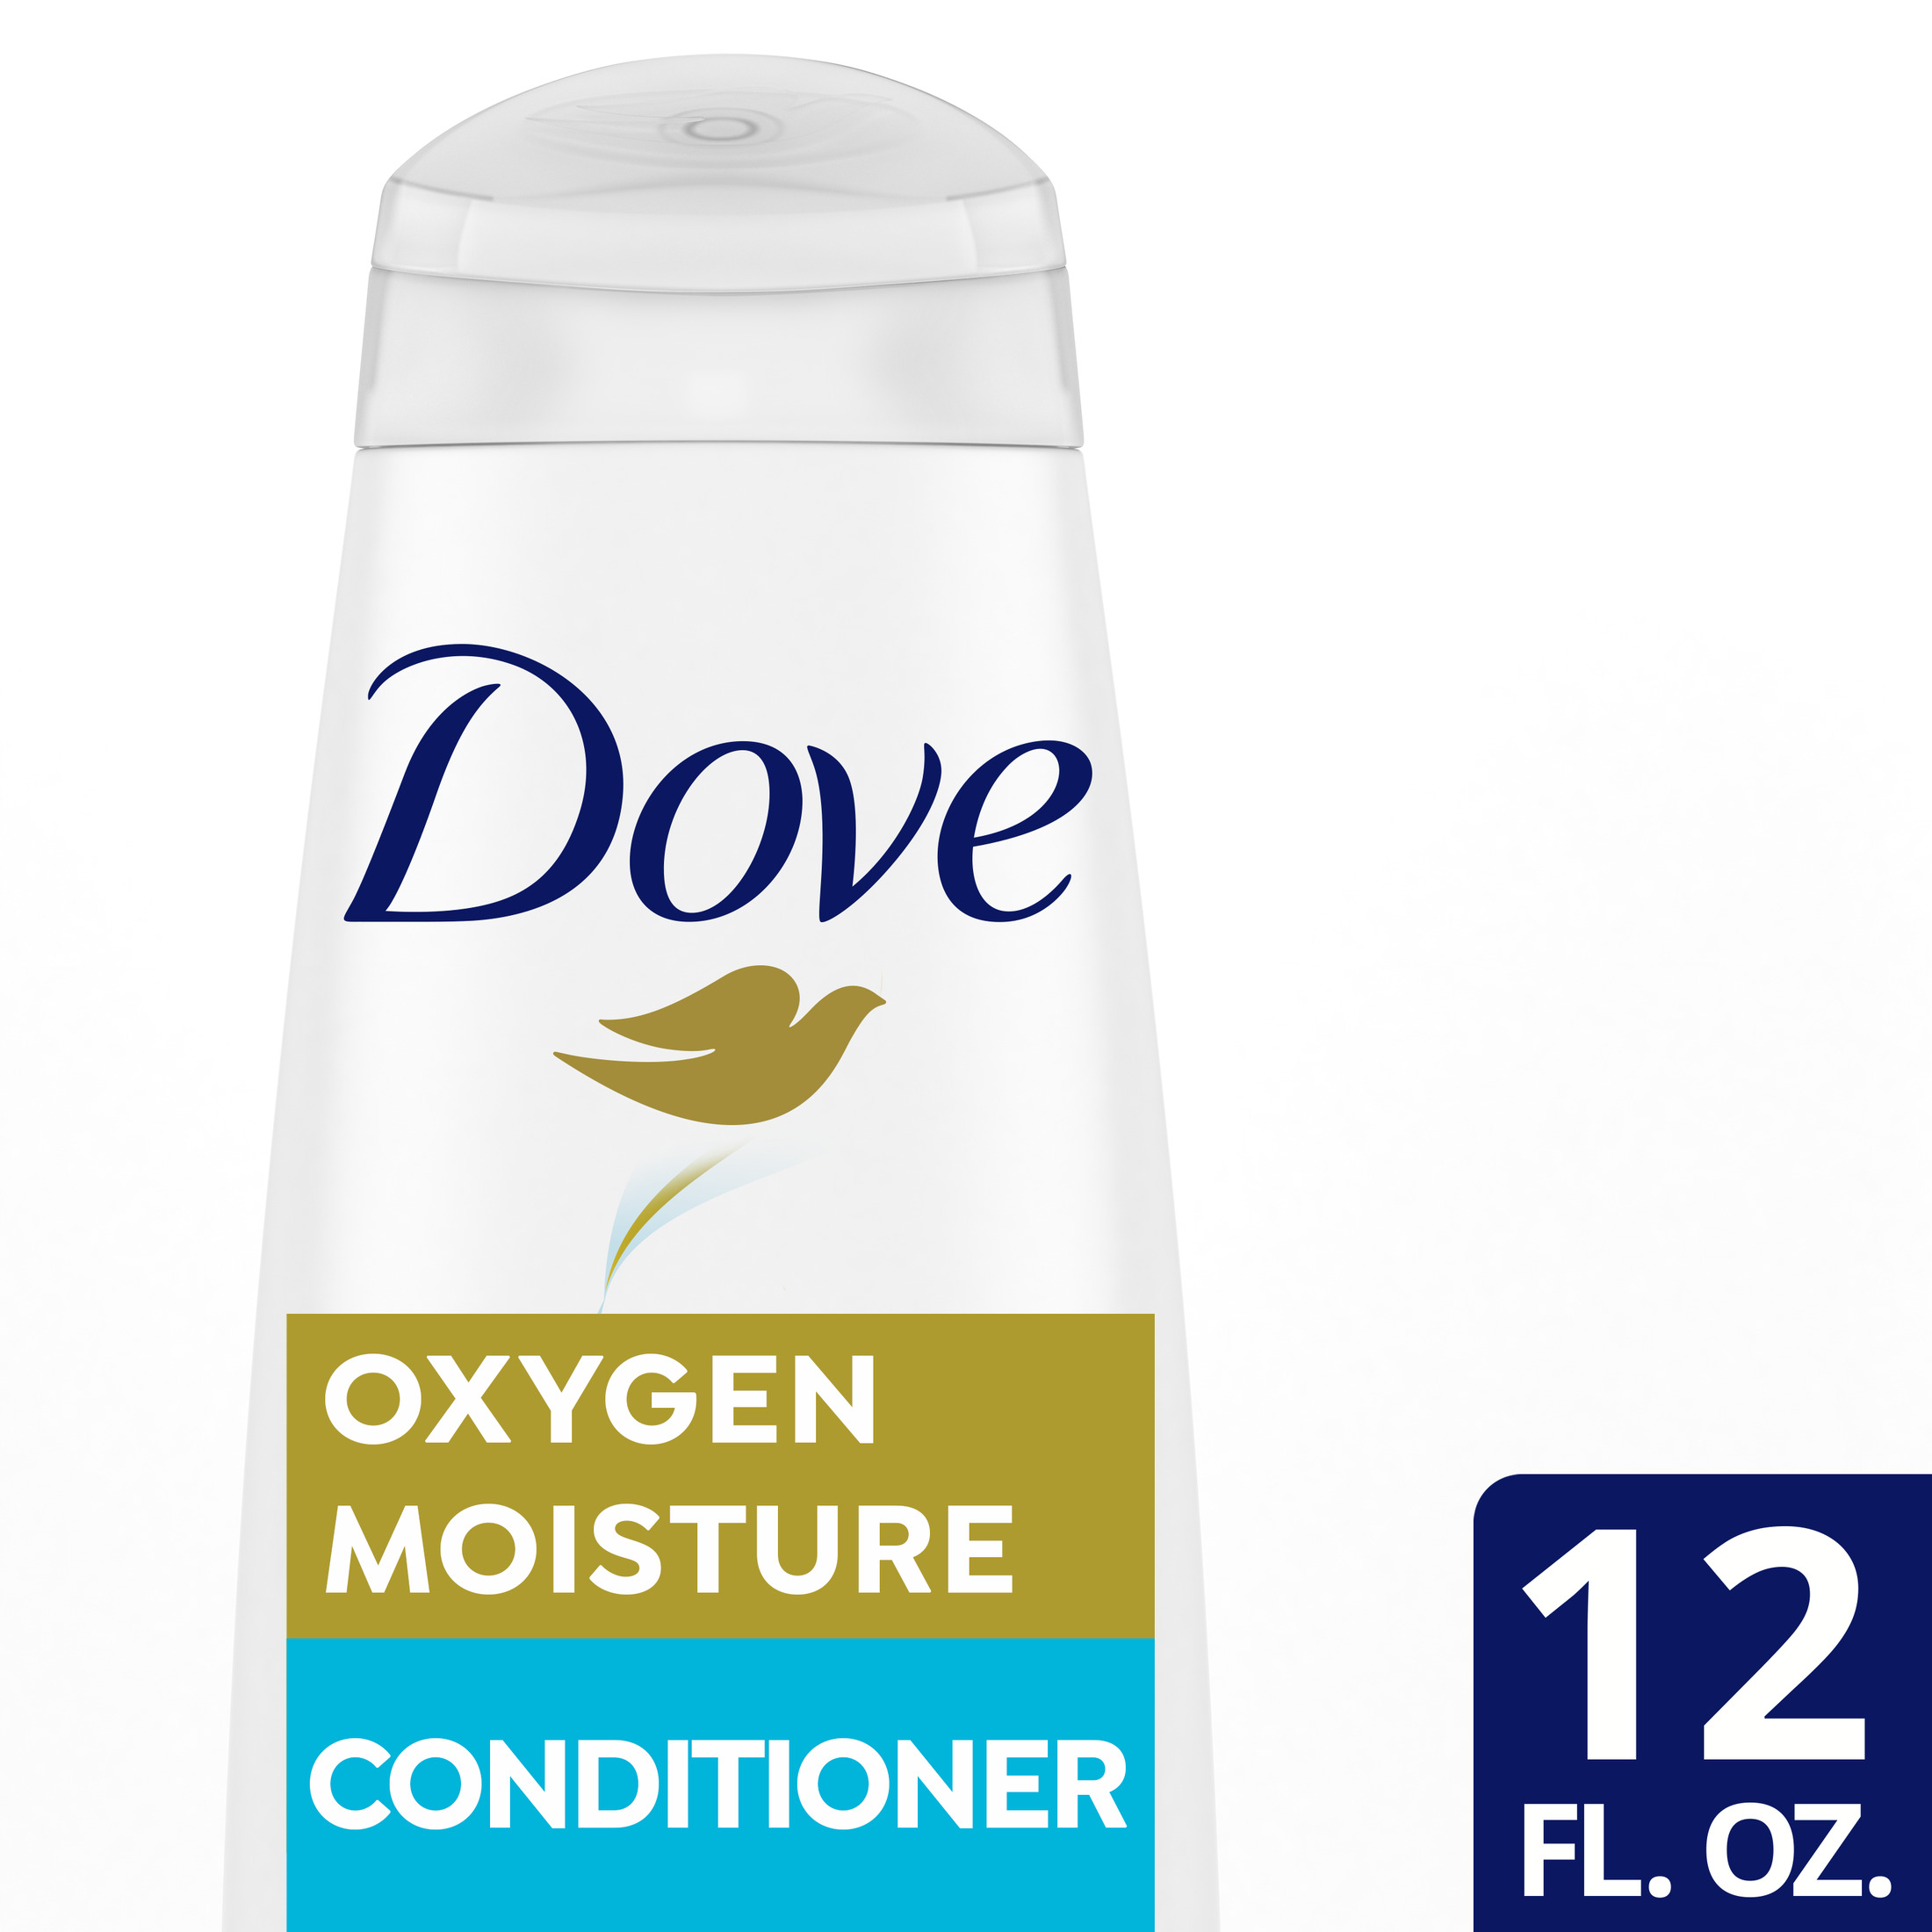 Dove Oxygen Moisture Conditioner, 12 oz - image 1 of 9